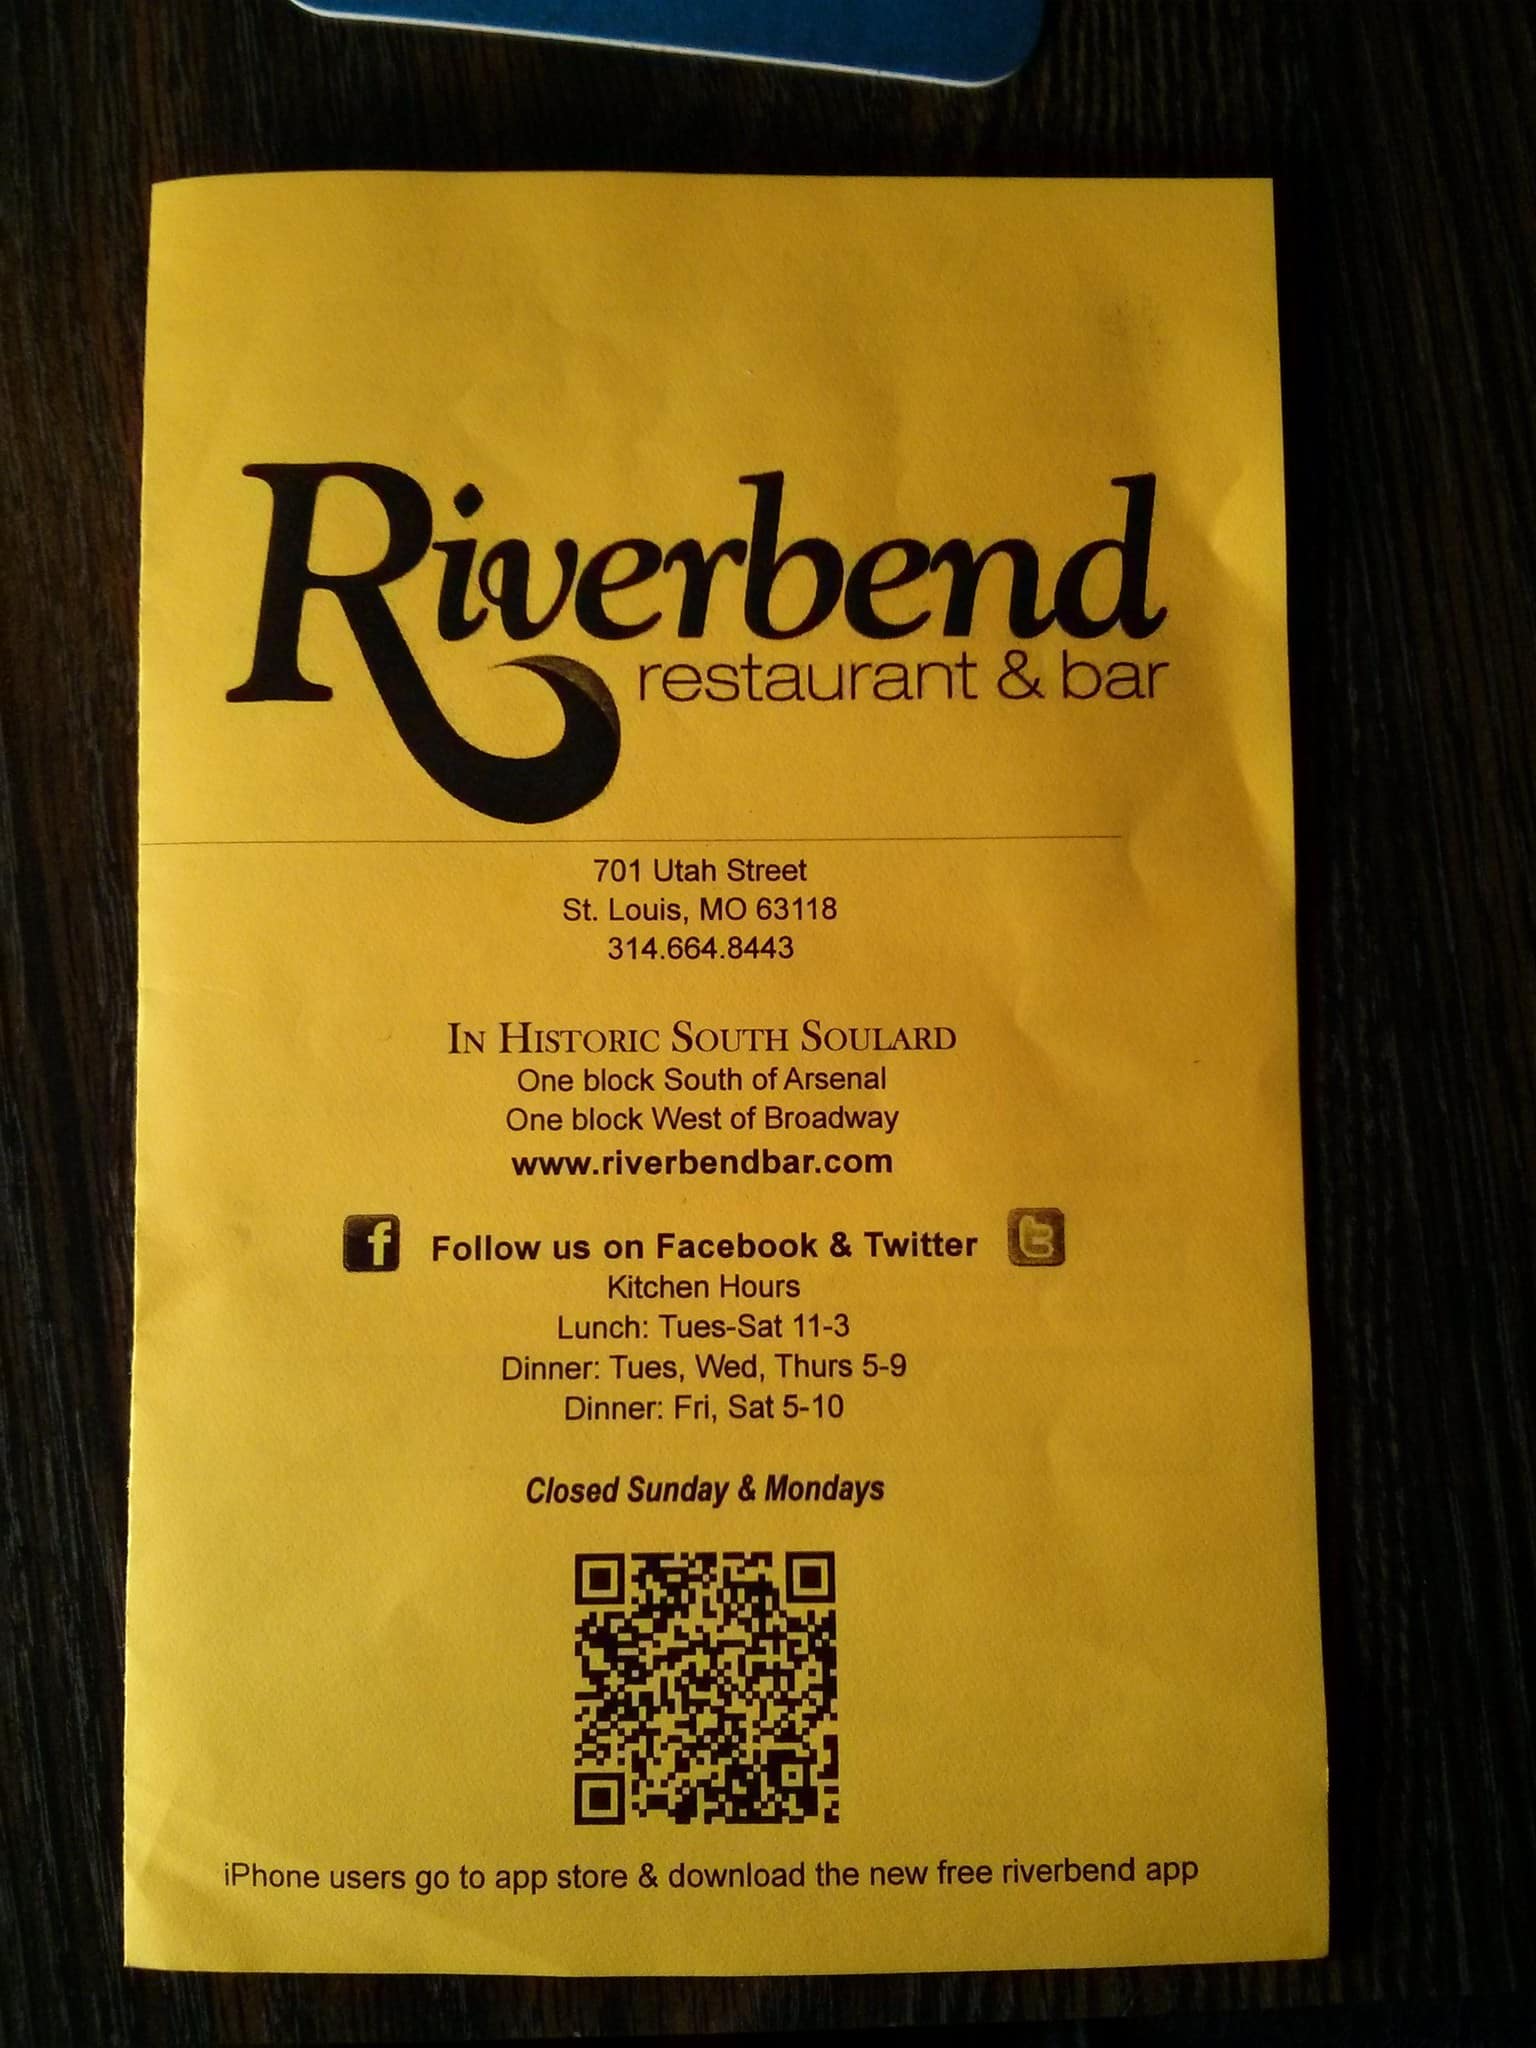 Riverbend Restaurant & Bar Menu - Urbanspoon/Zomato